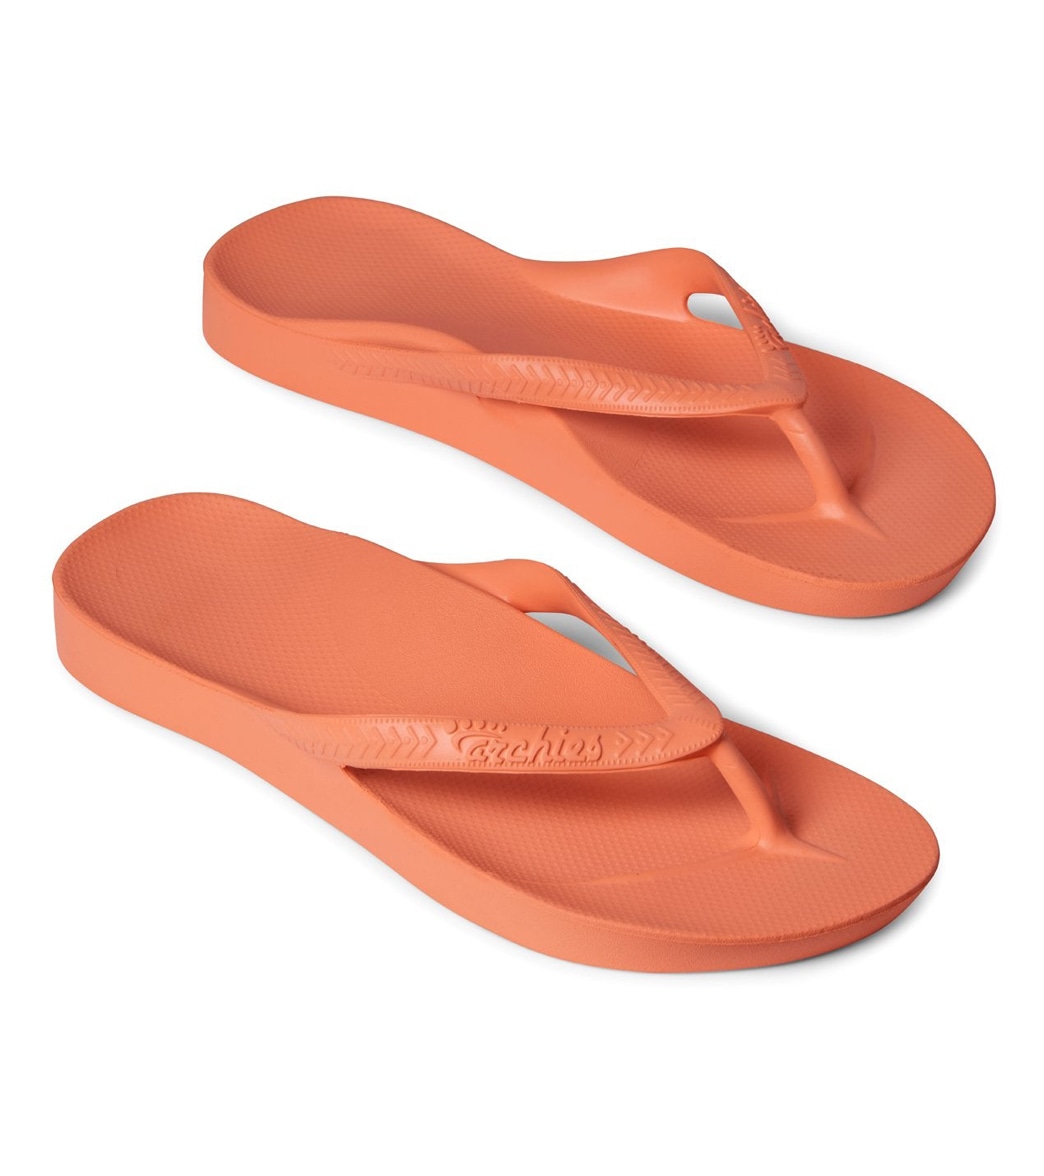 Archie's Footwear Archies Footwear Arch Support Flip Flops - Peach Men's 6 / Women's 7 - Swimoutlet.com